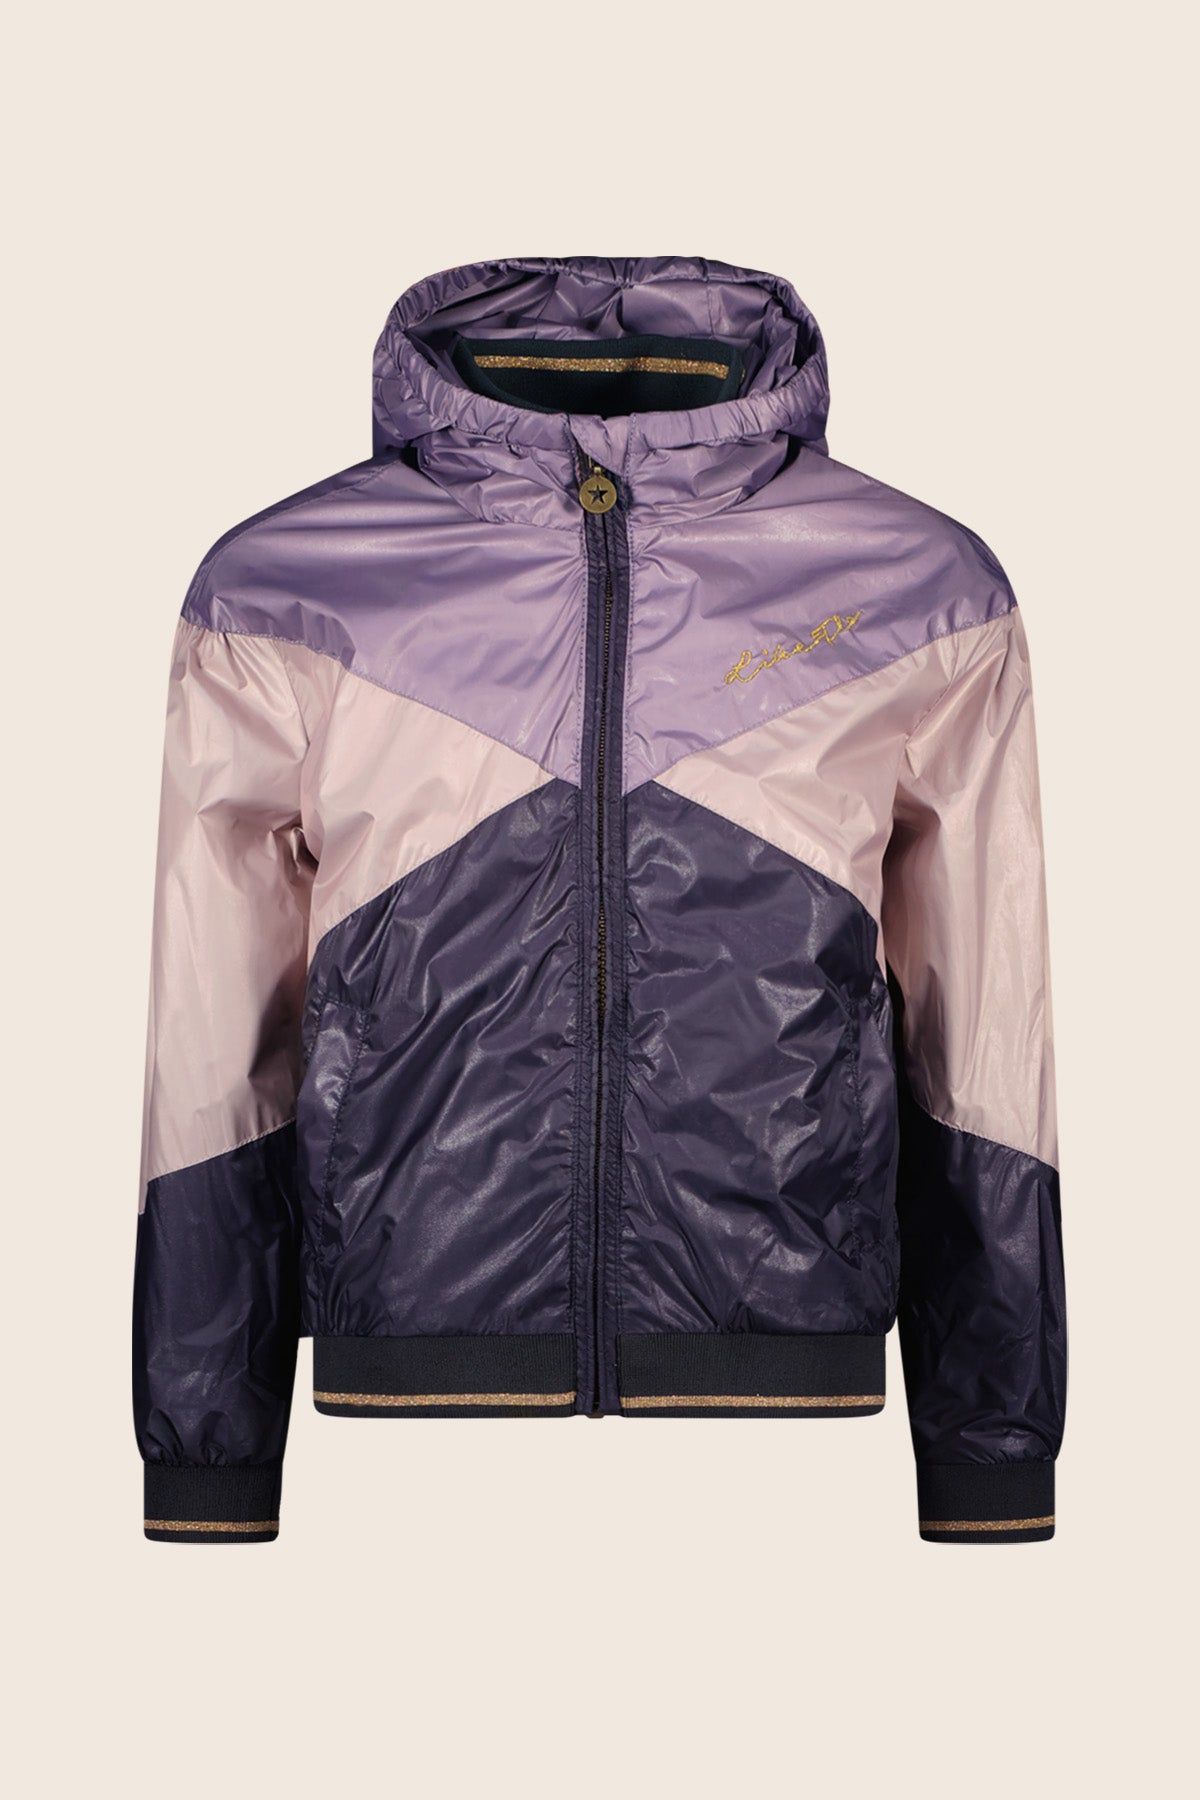 Jas Flo girls hooded summer jacket Colourblock Purple